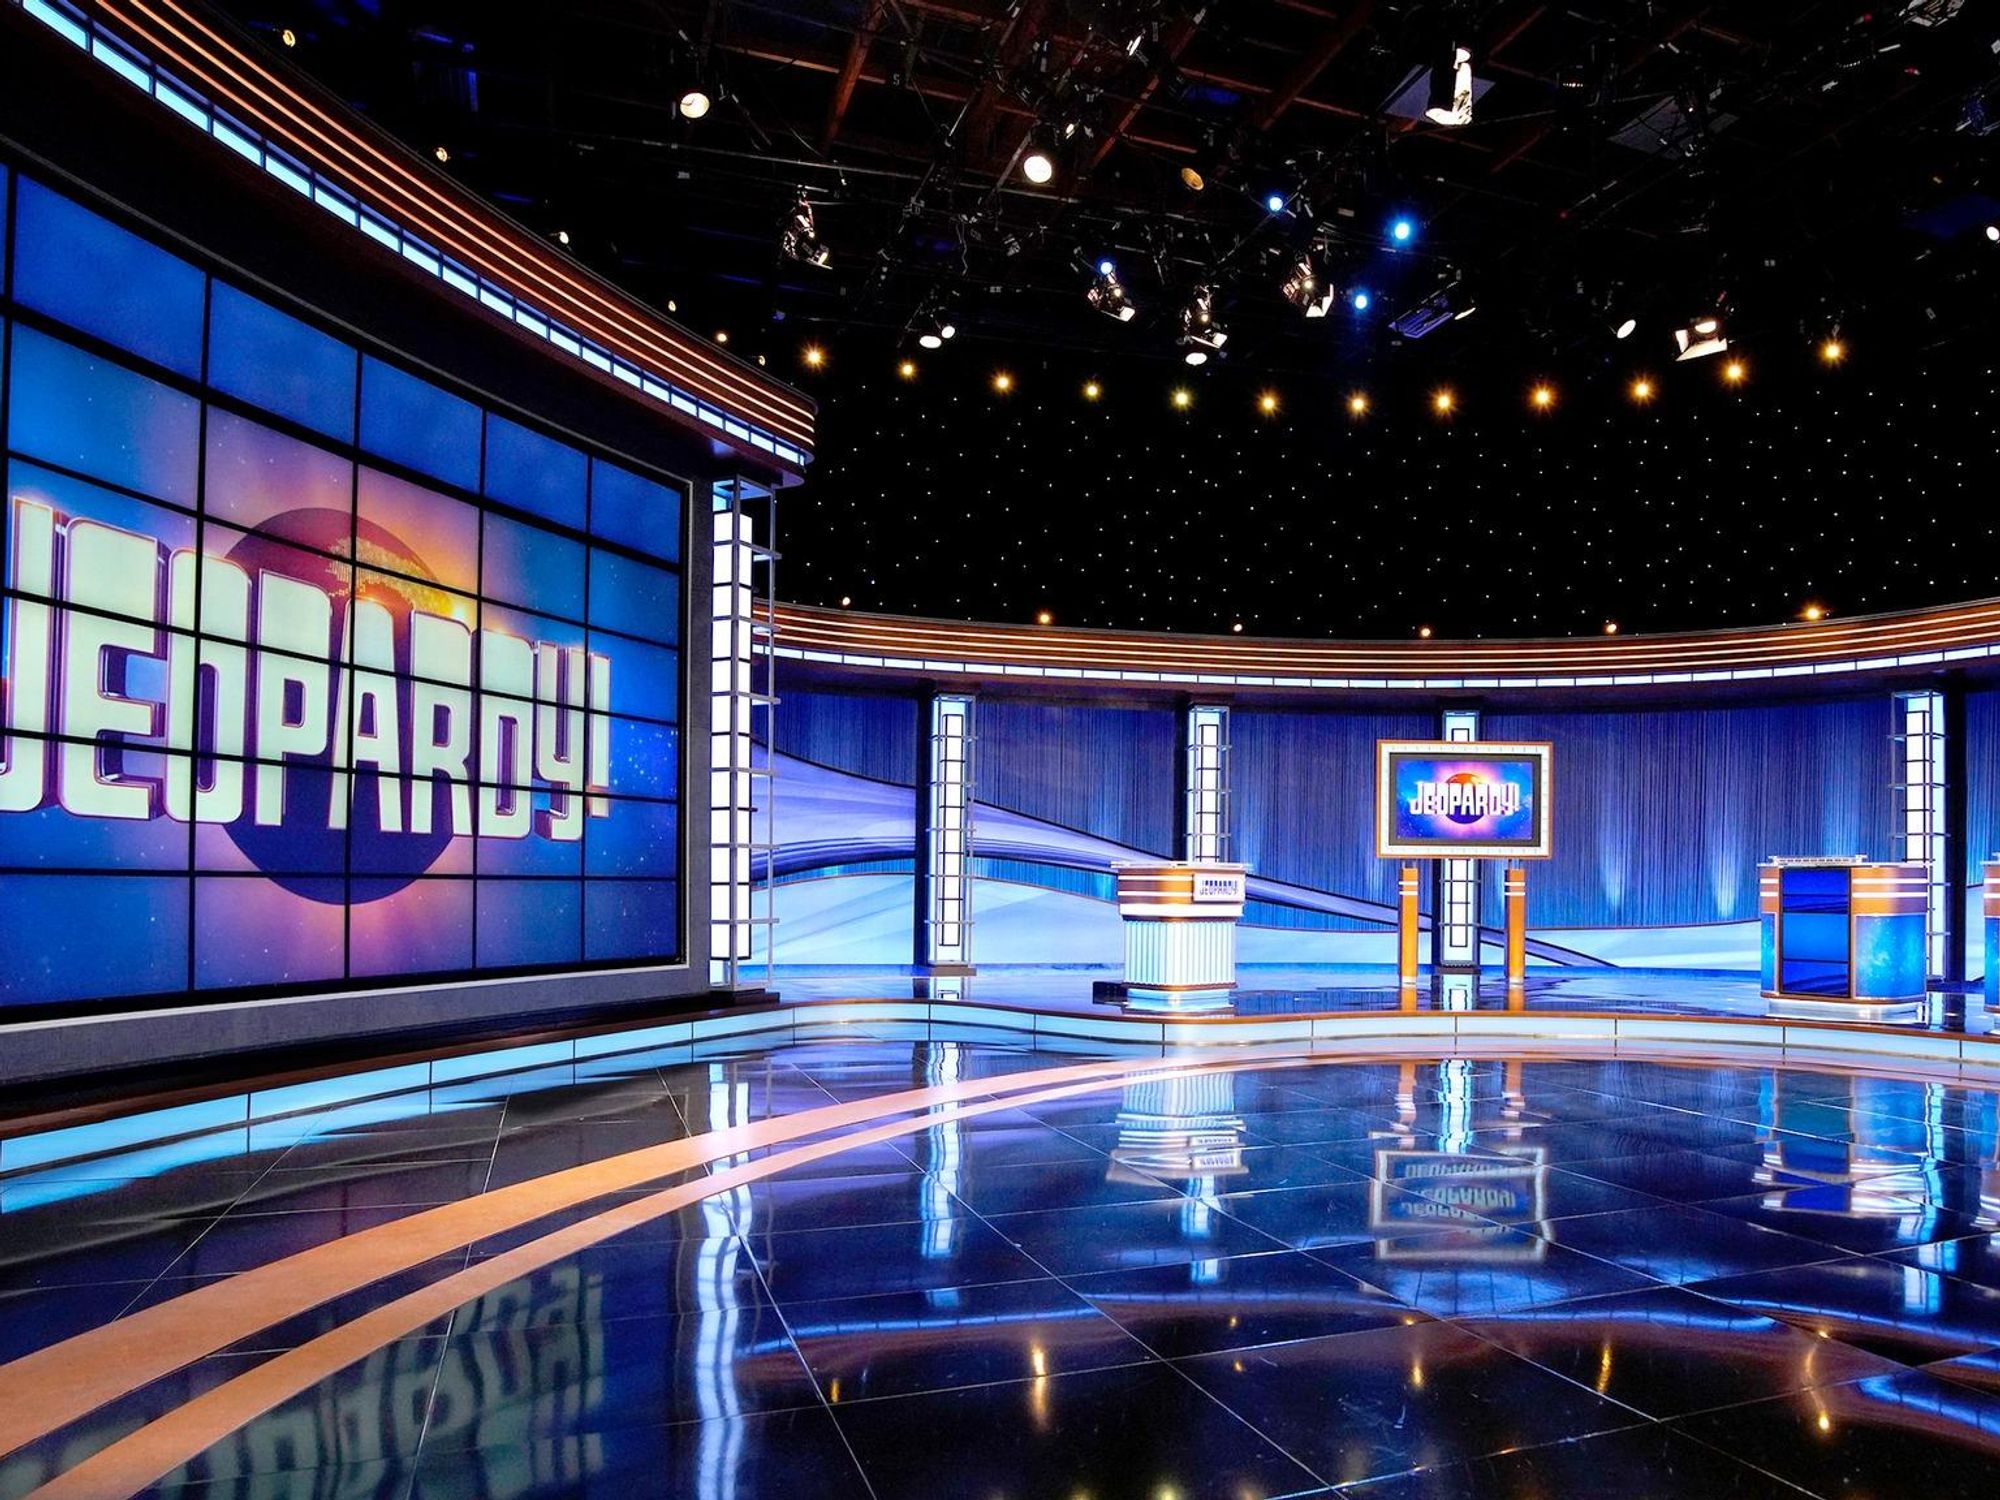 Jeopardy game show set